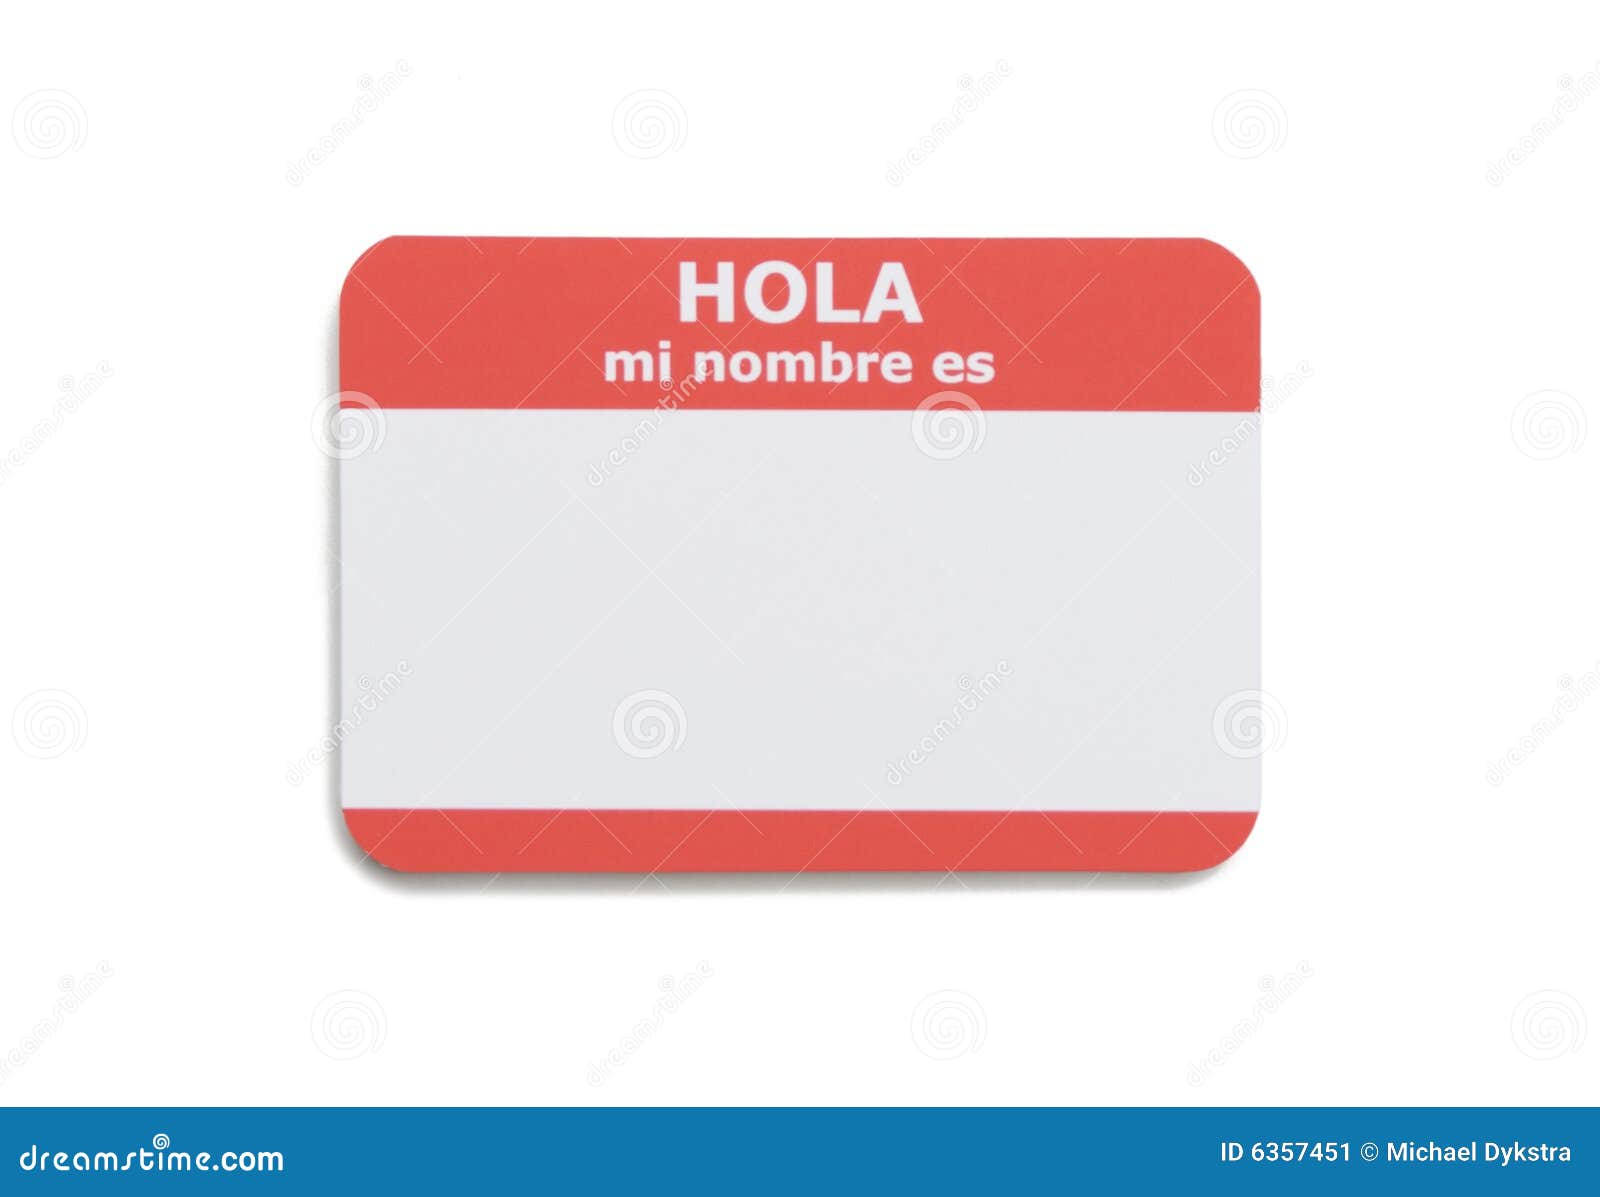 Spanish Hello Name Tag stock image. Image of greeting - 6357451